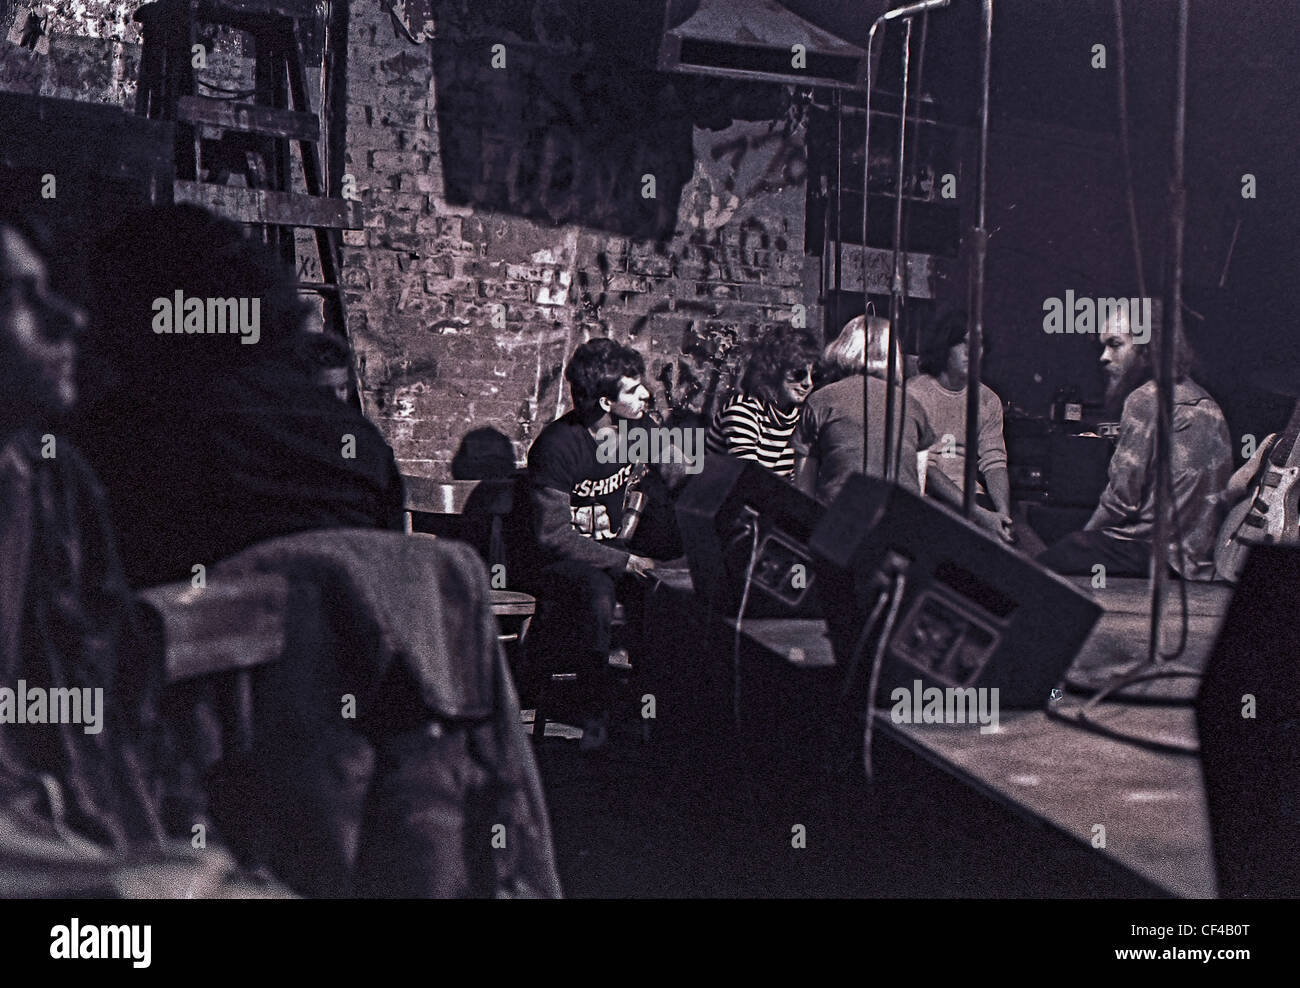 New York, NY, USA - People Hanging Out inside C.B.G.B.'s Nightclub, Interior Scene, 1970s Music, vintage American photos Stock Photo